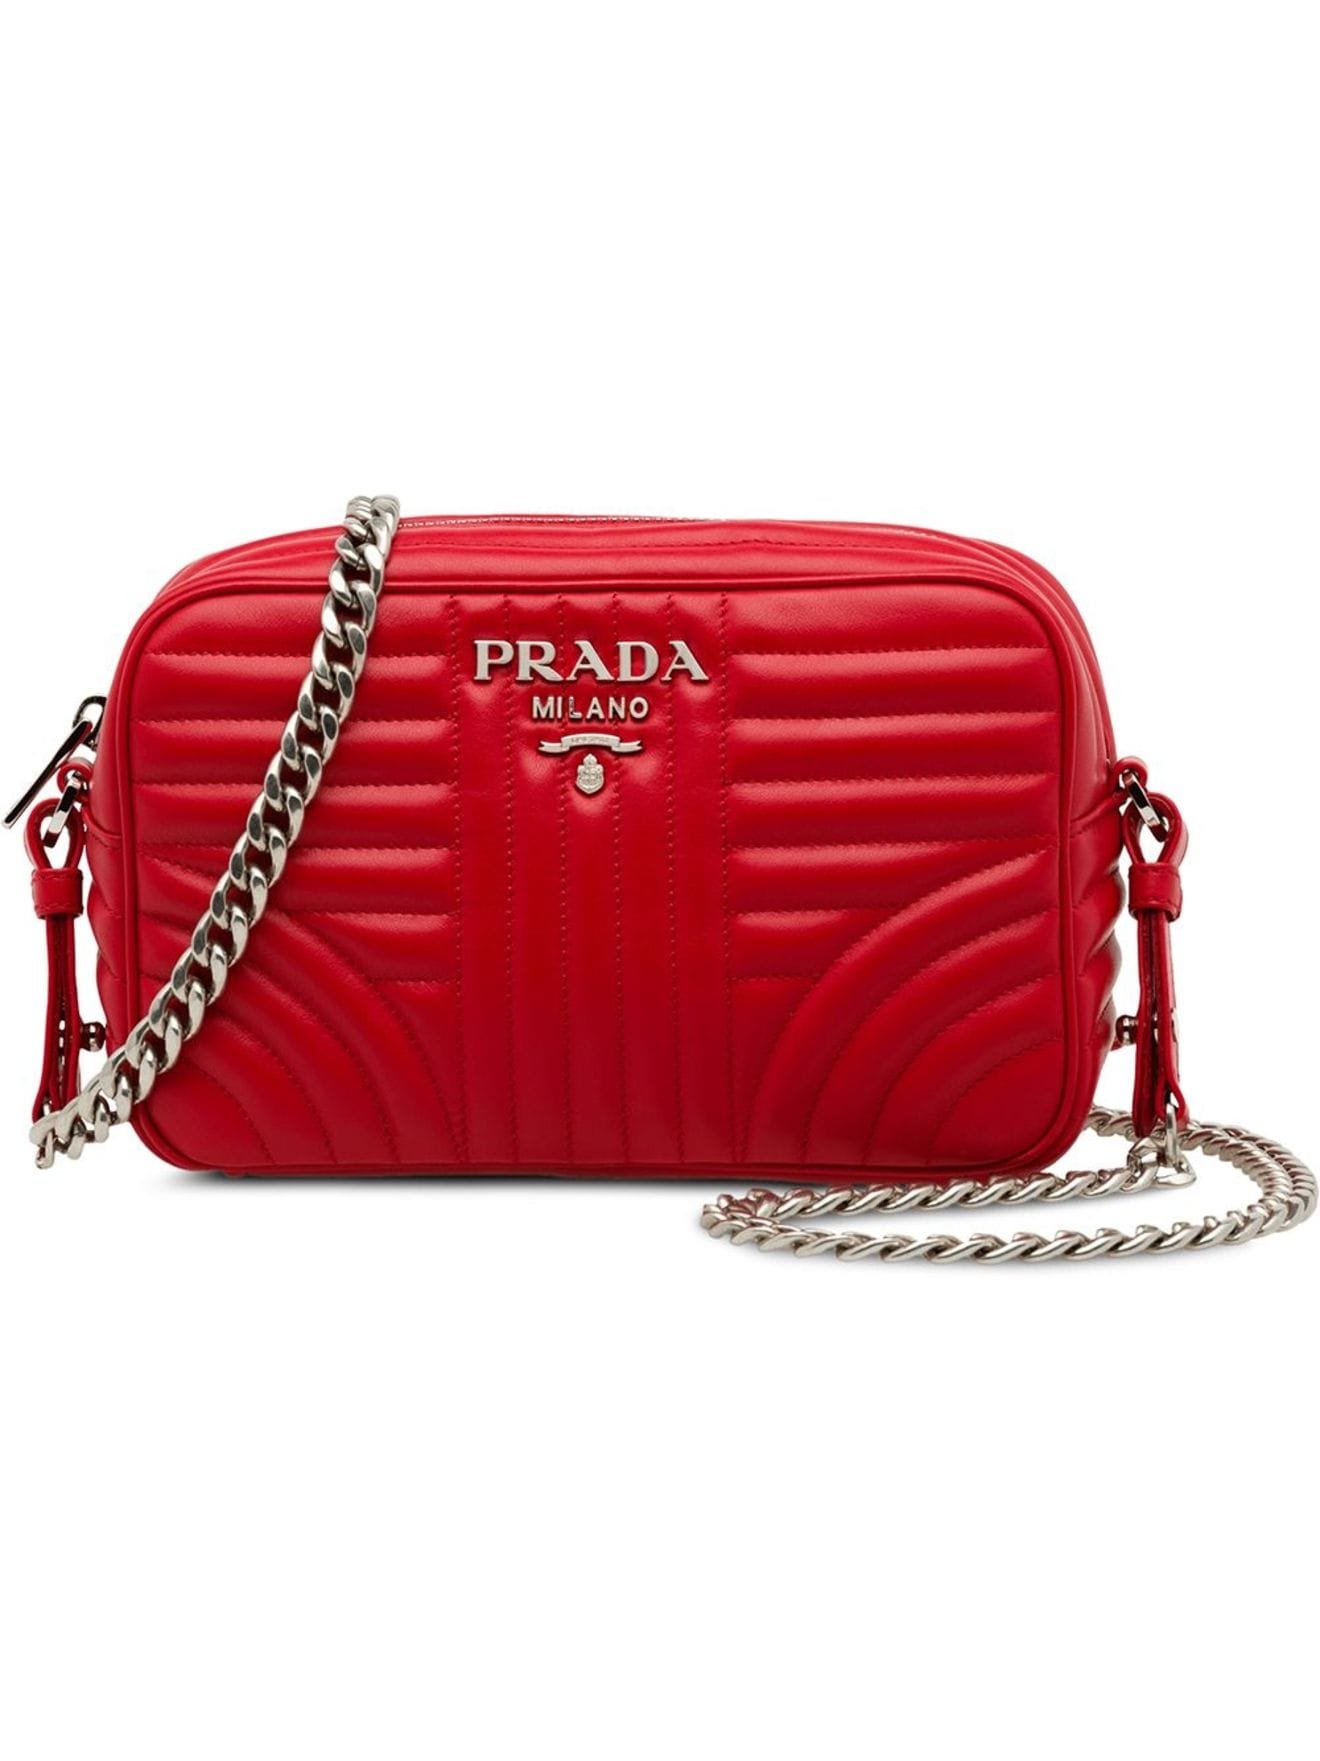 Prada Prada Diagramme leather crossbody bag red | MODES